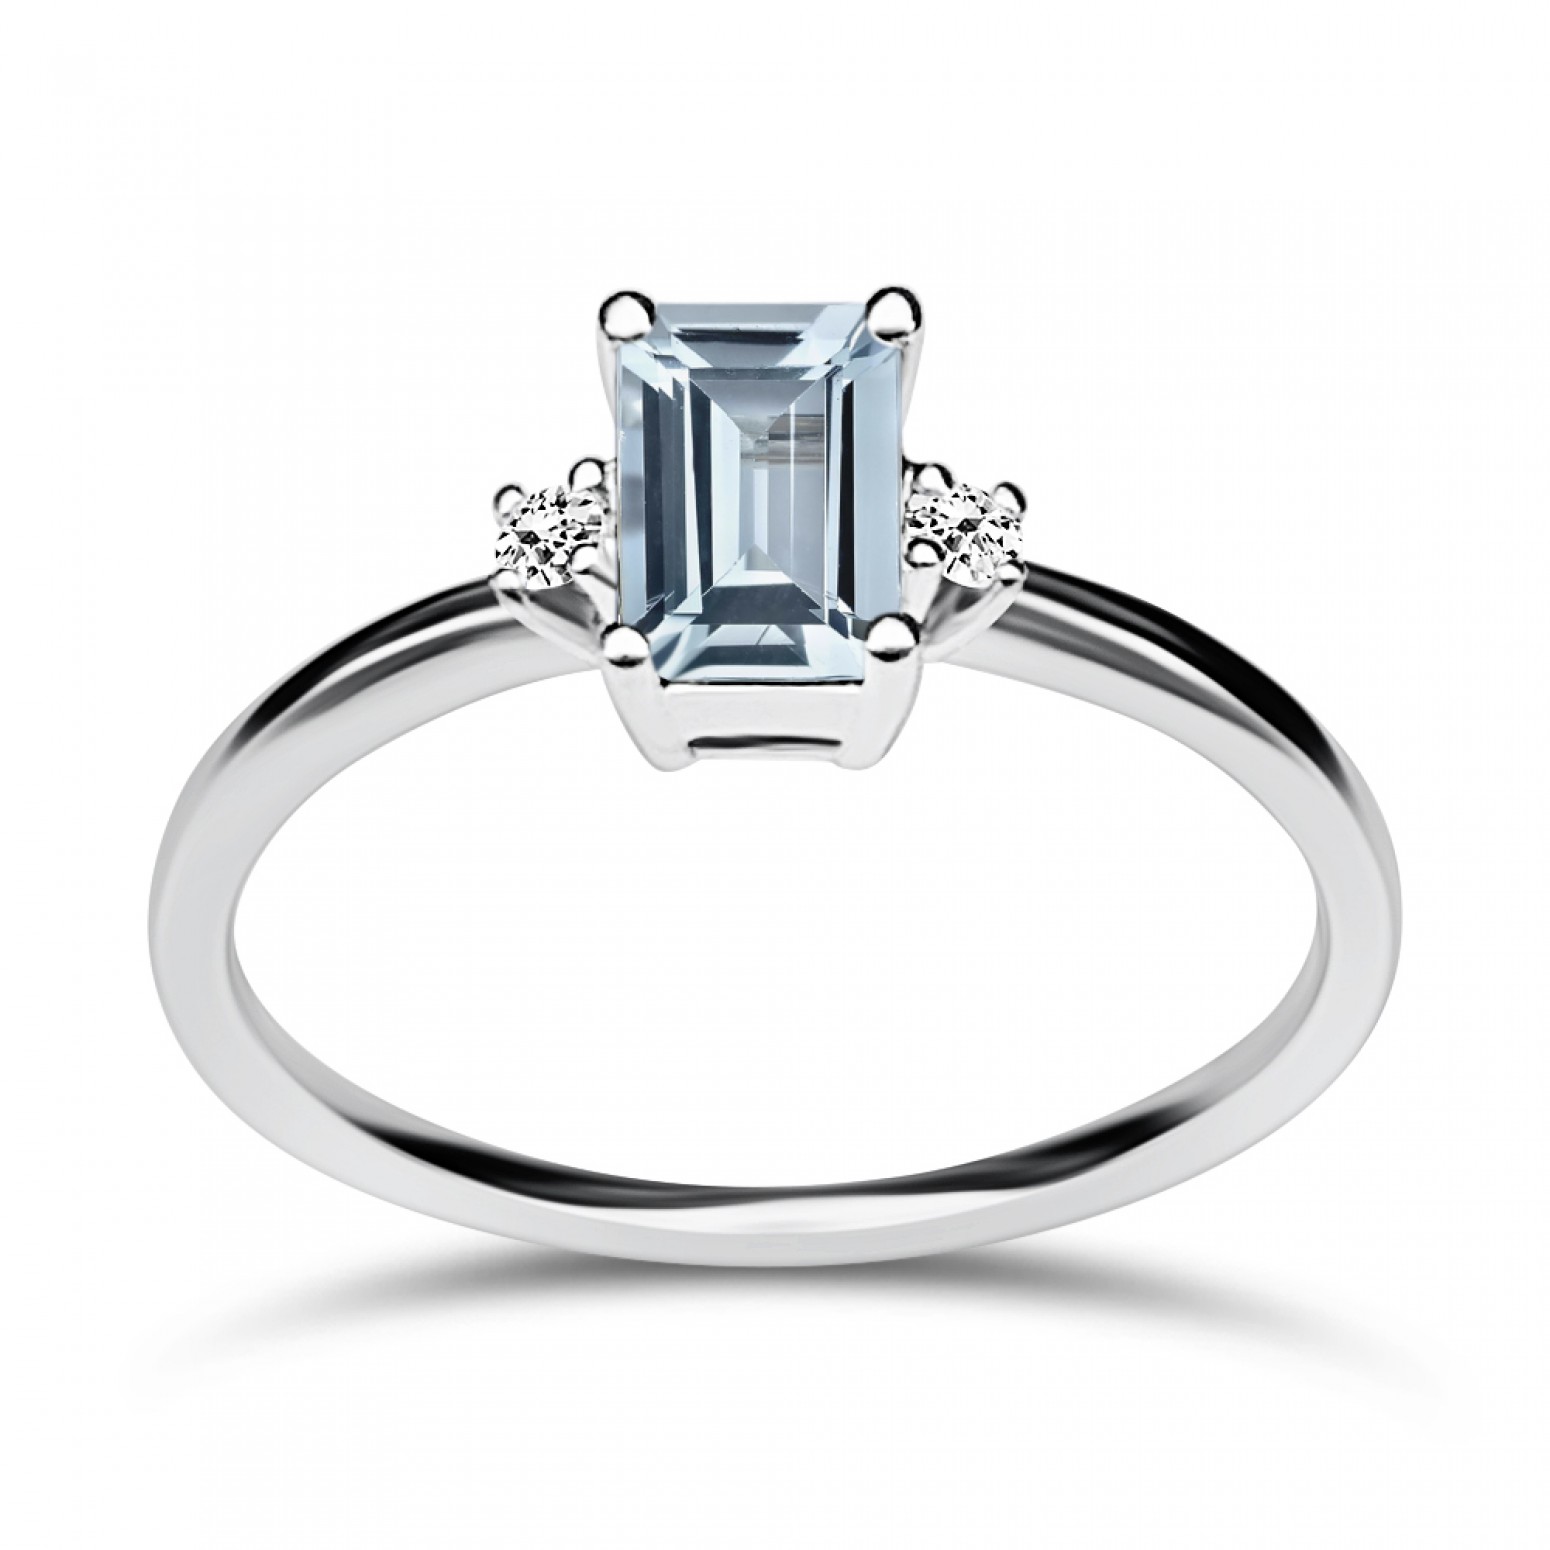 Solitaire ring 18K white gold with aquamarine 0.44ct and diamonds  VS1, G da4062 ENGAGEMENT RINGS Κοσμηματα - chrilia.gr